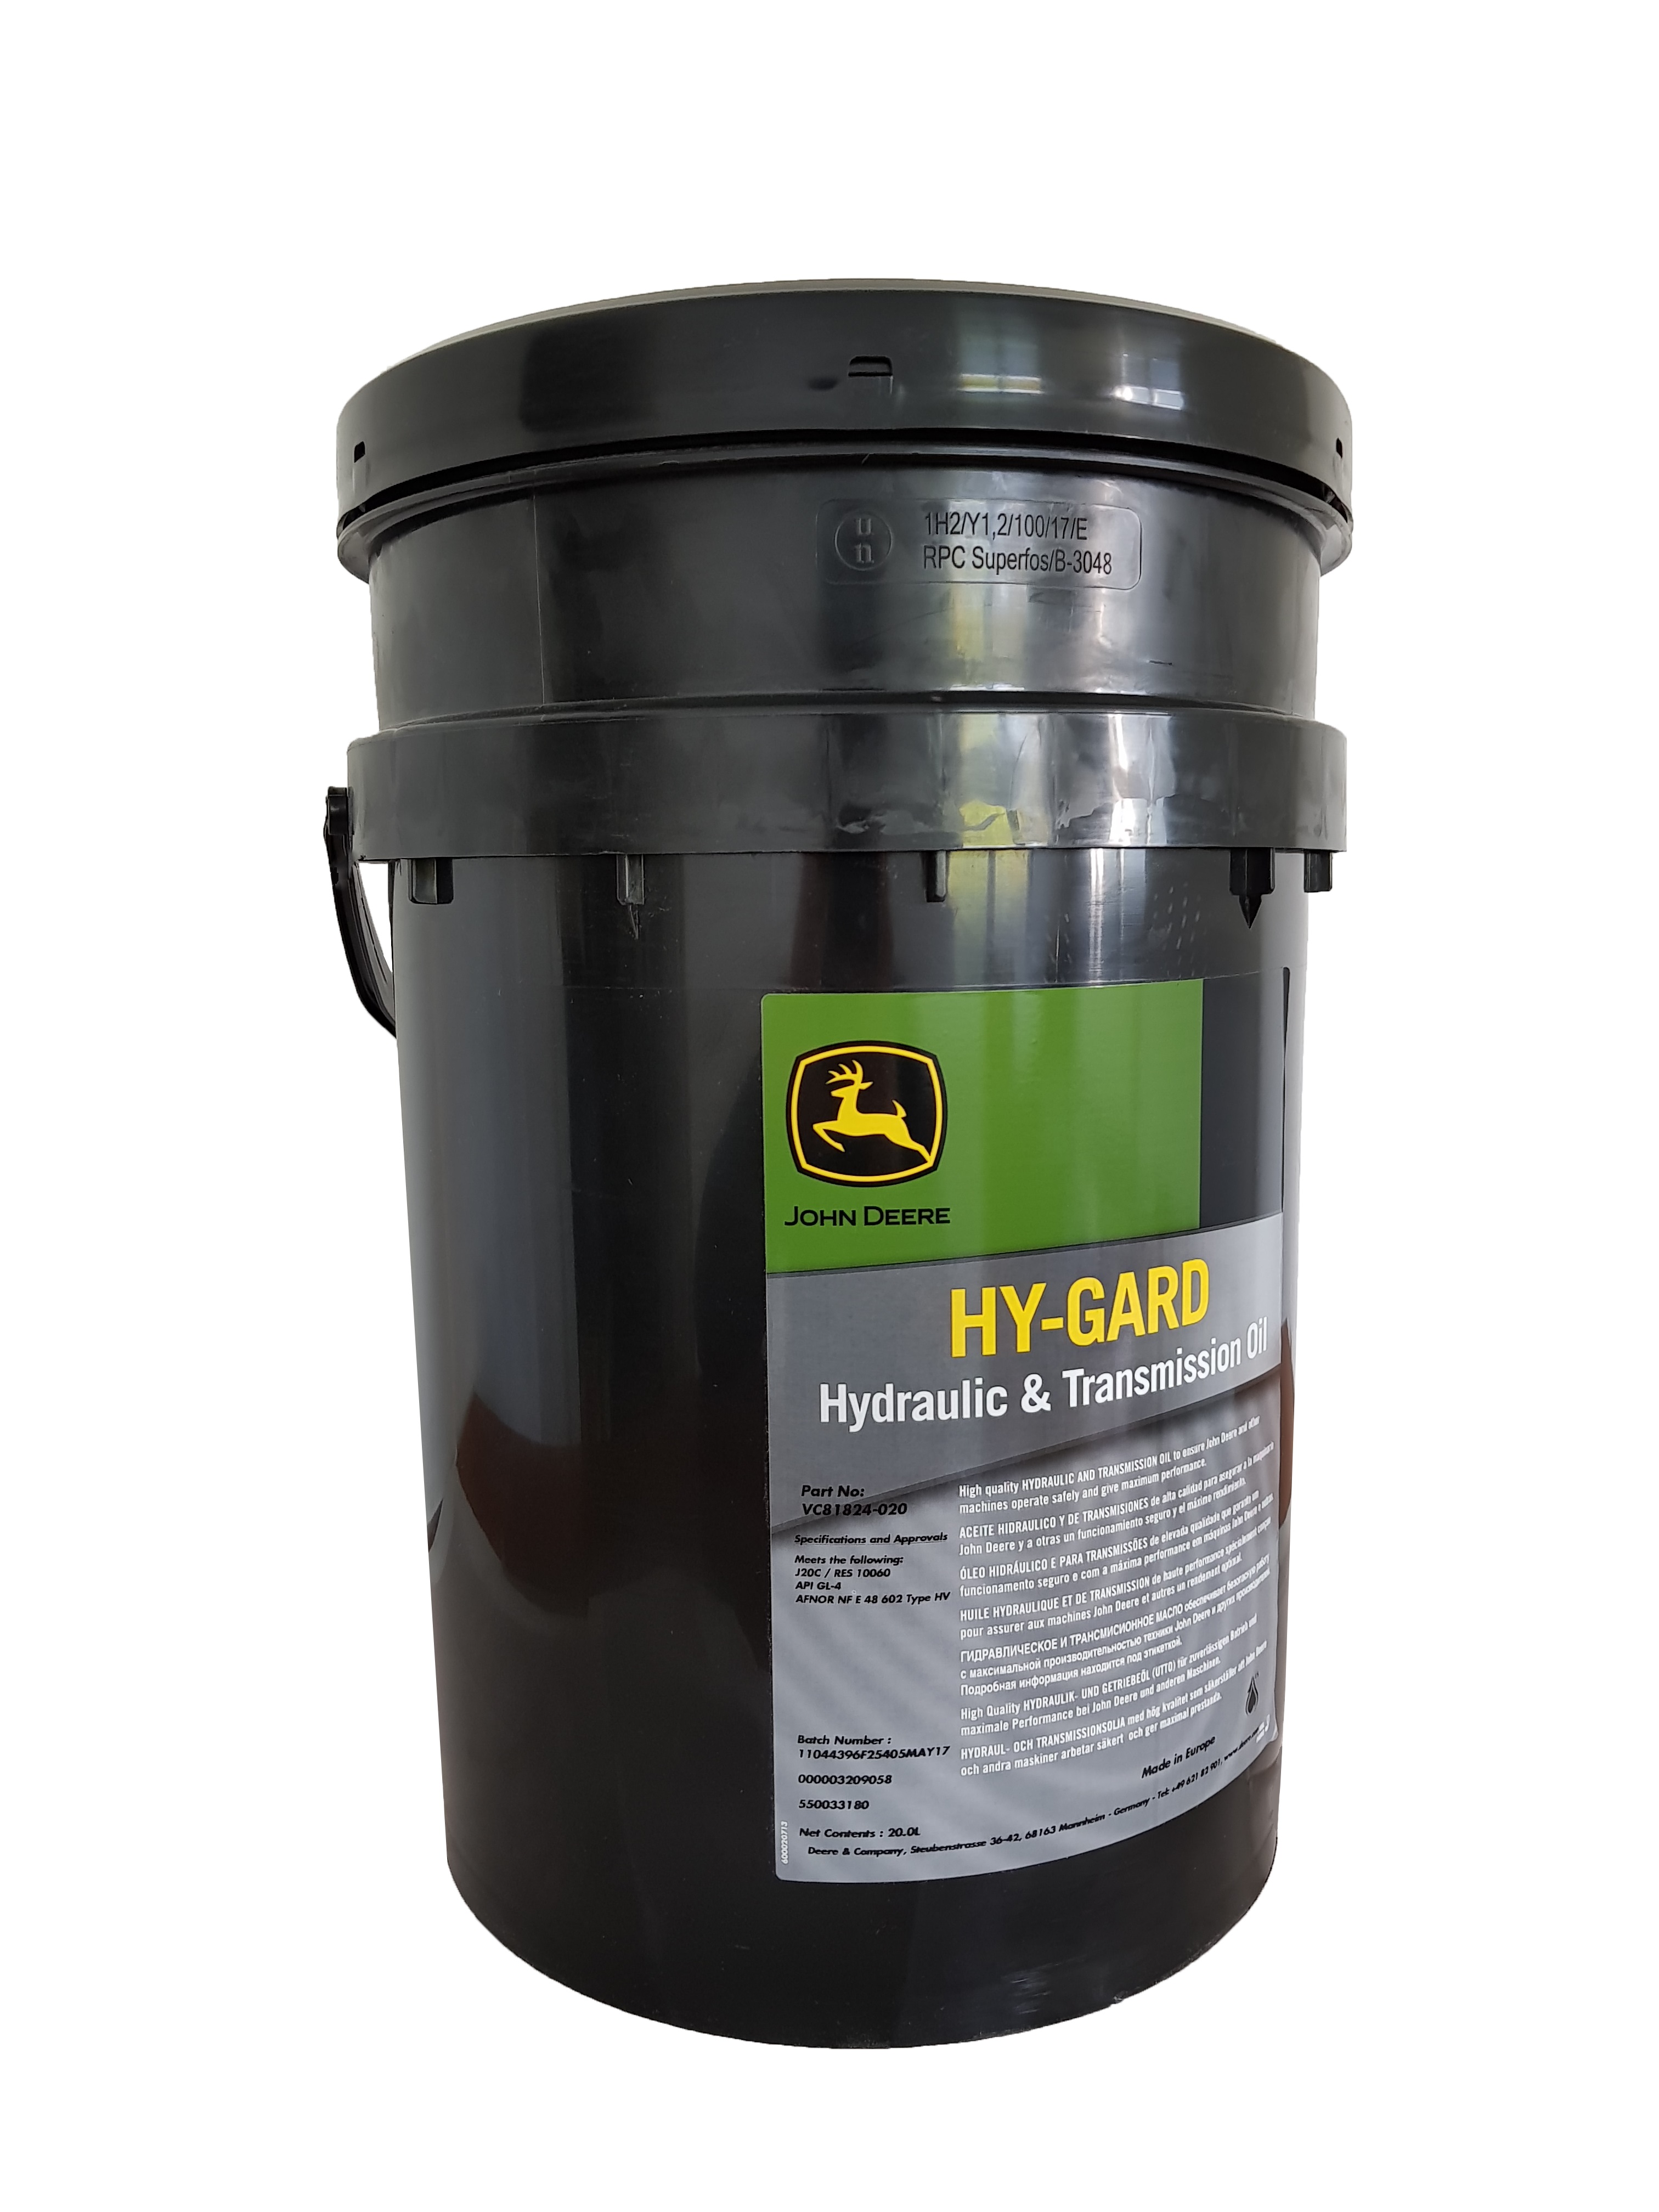 John Deere Hy-Gard Getriebeöl und Hydrauliköl 20 Liter